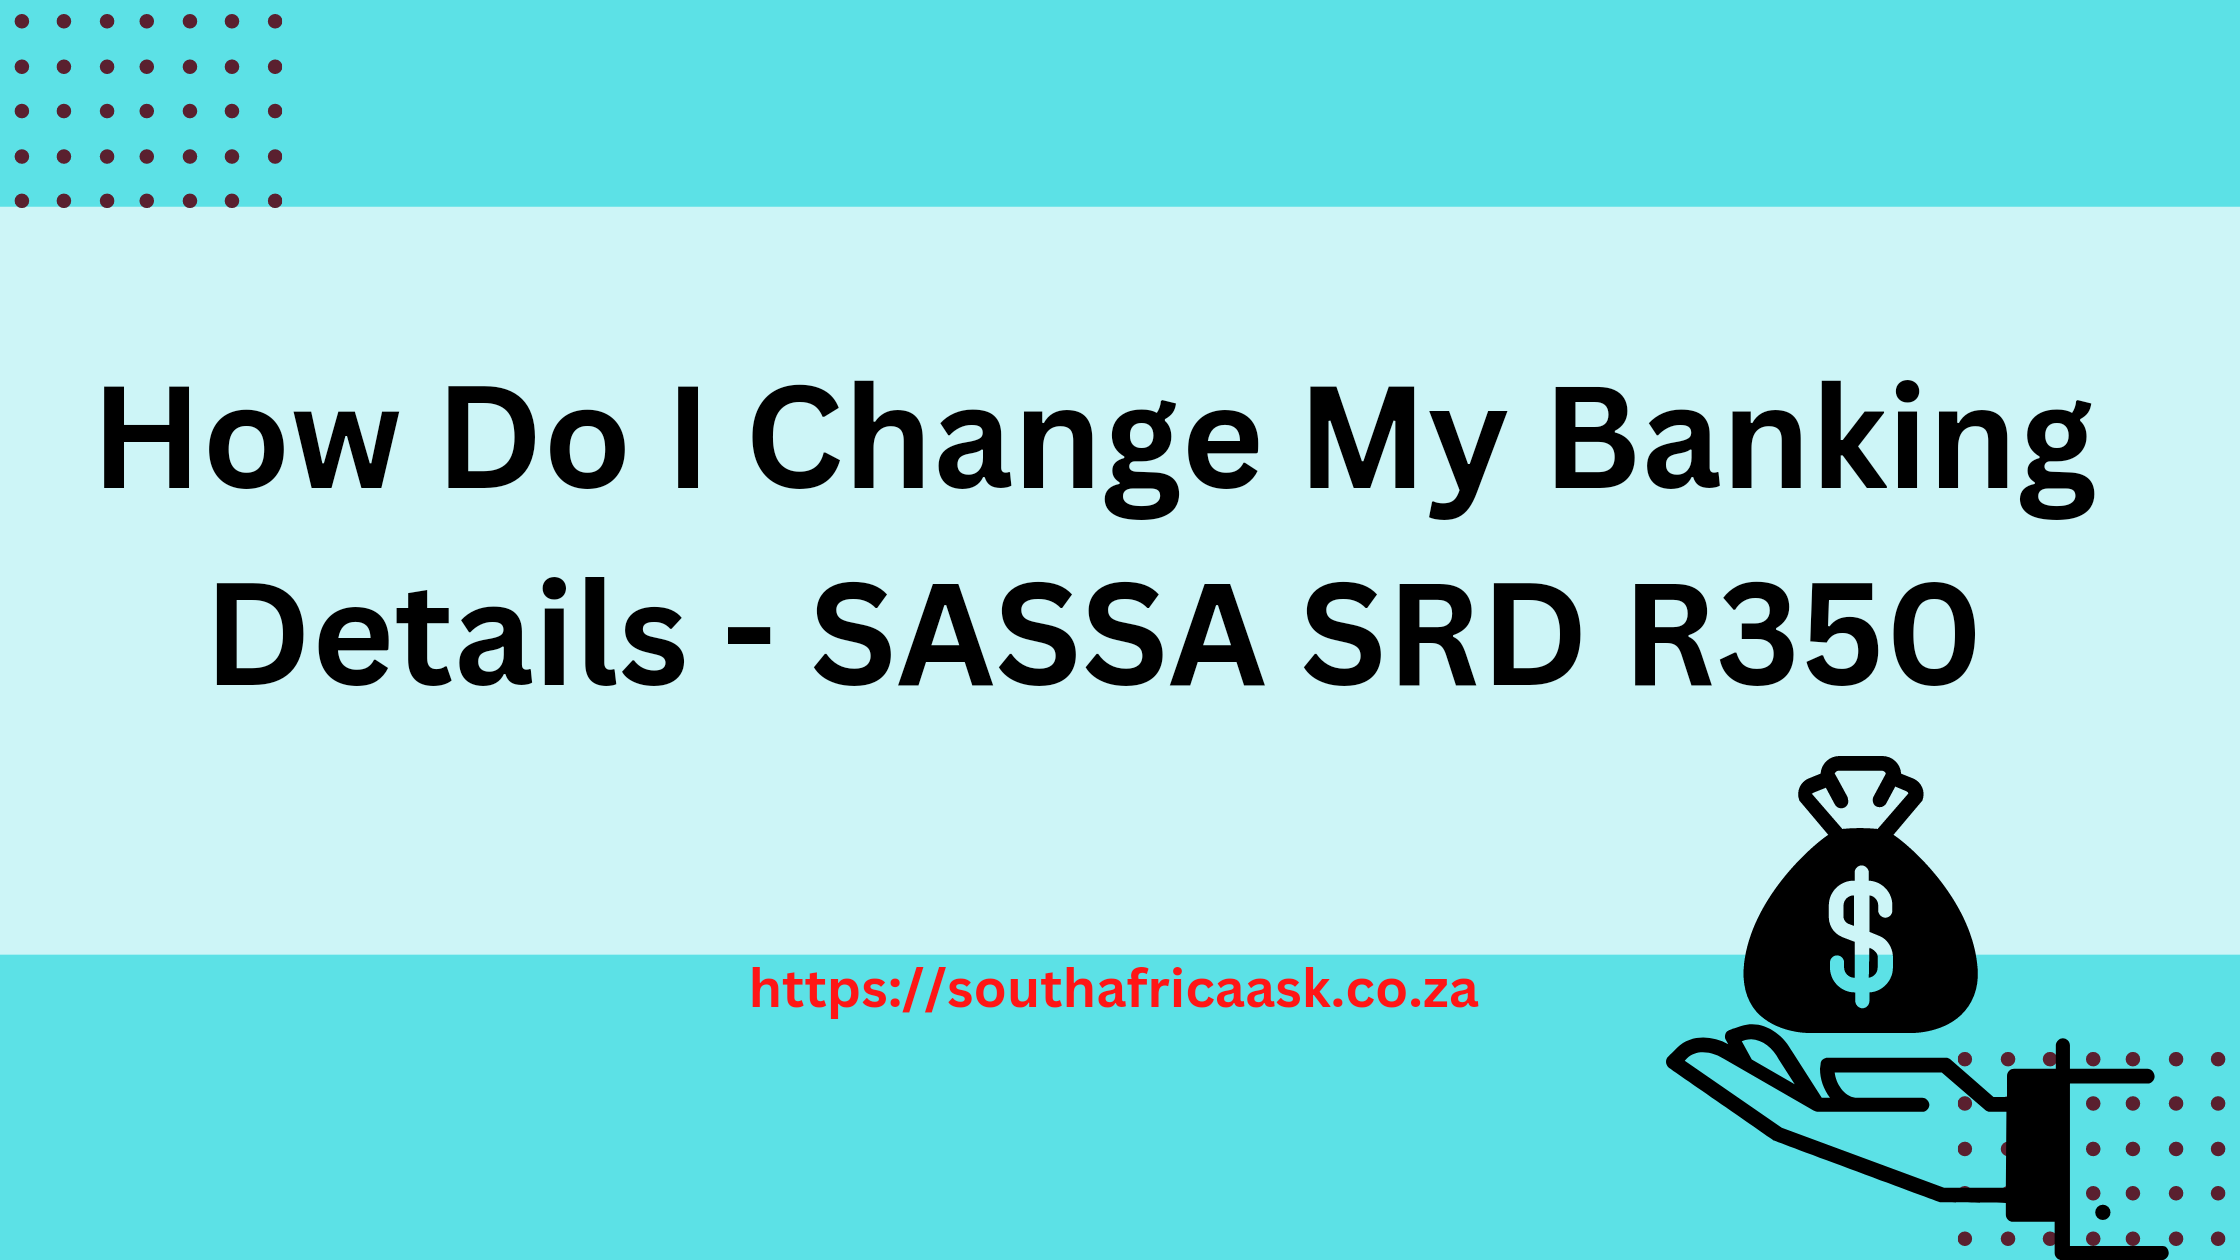 How Do I Change My Banking Details - SASSA SRD R350